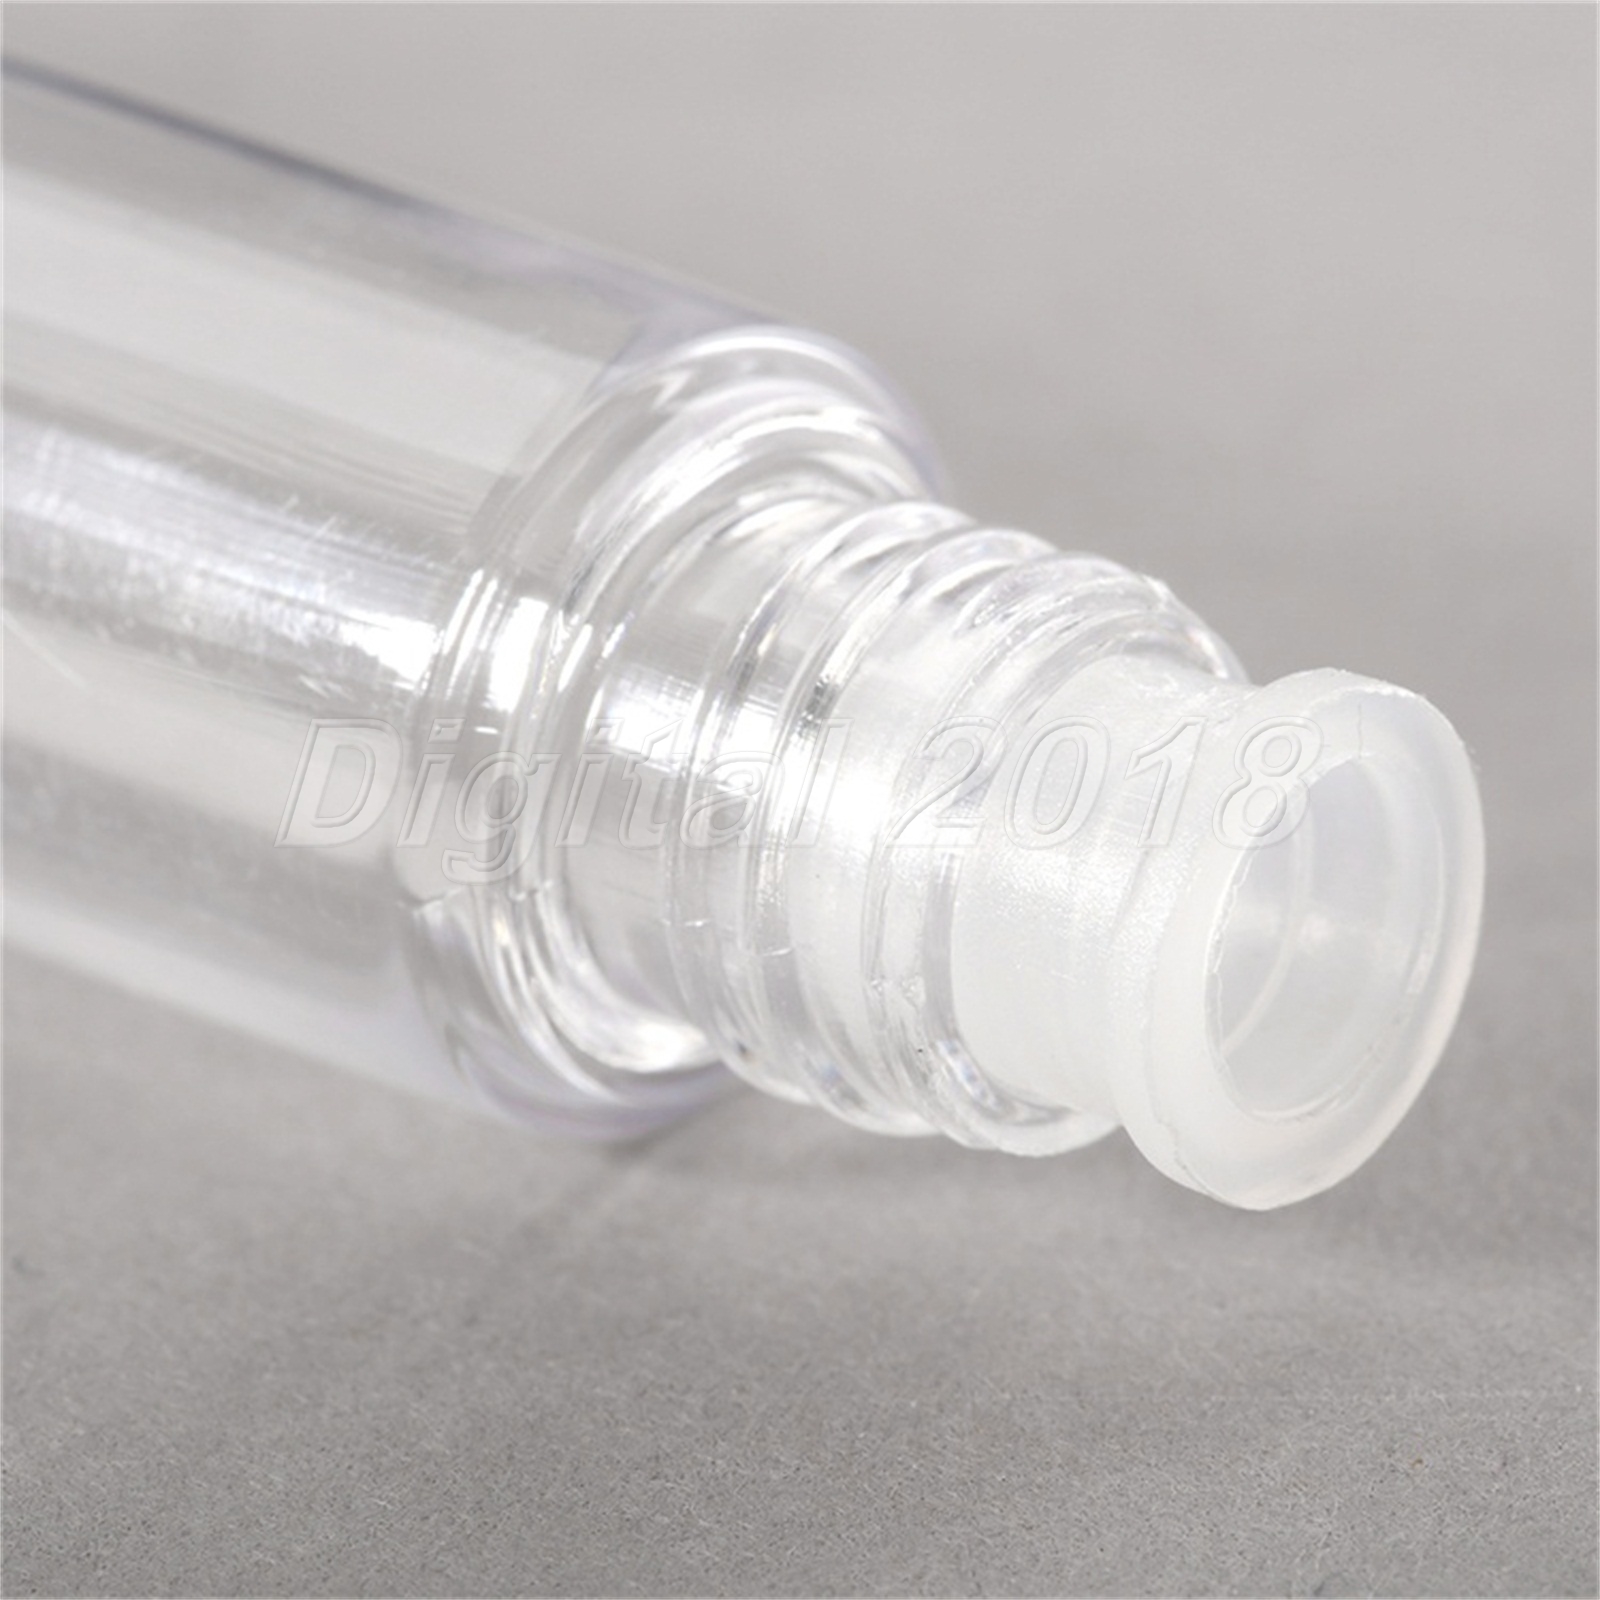 Silver Lid Lip Gloss Tube Empty Clear Lip Balm Container Cosmetic Essentia Ebay 